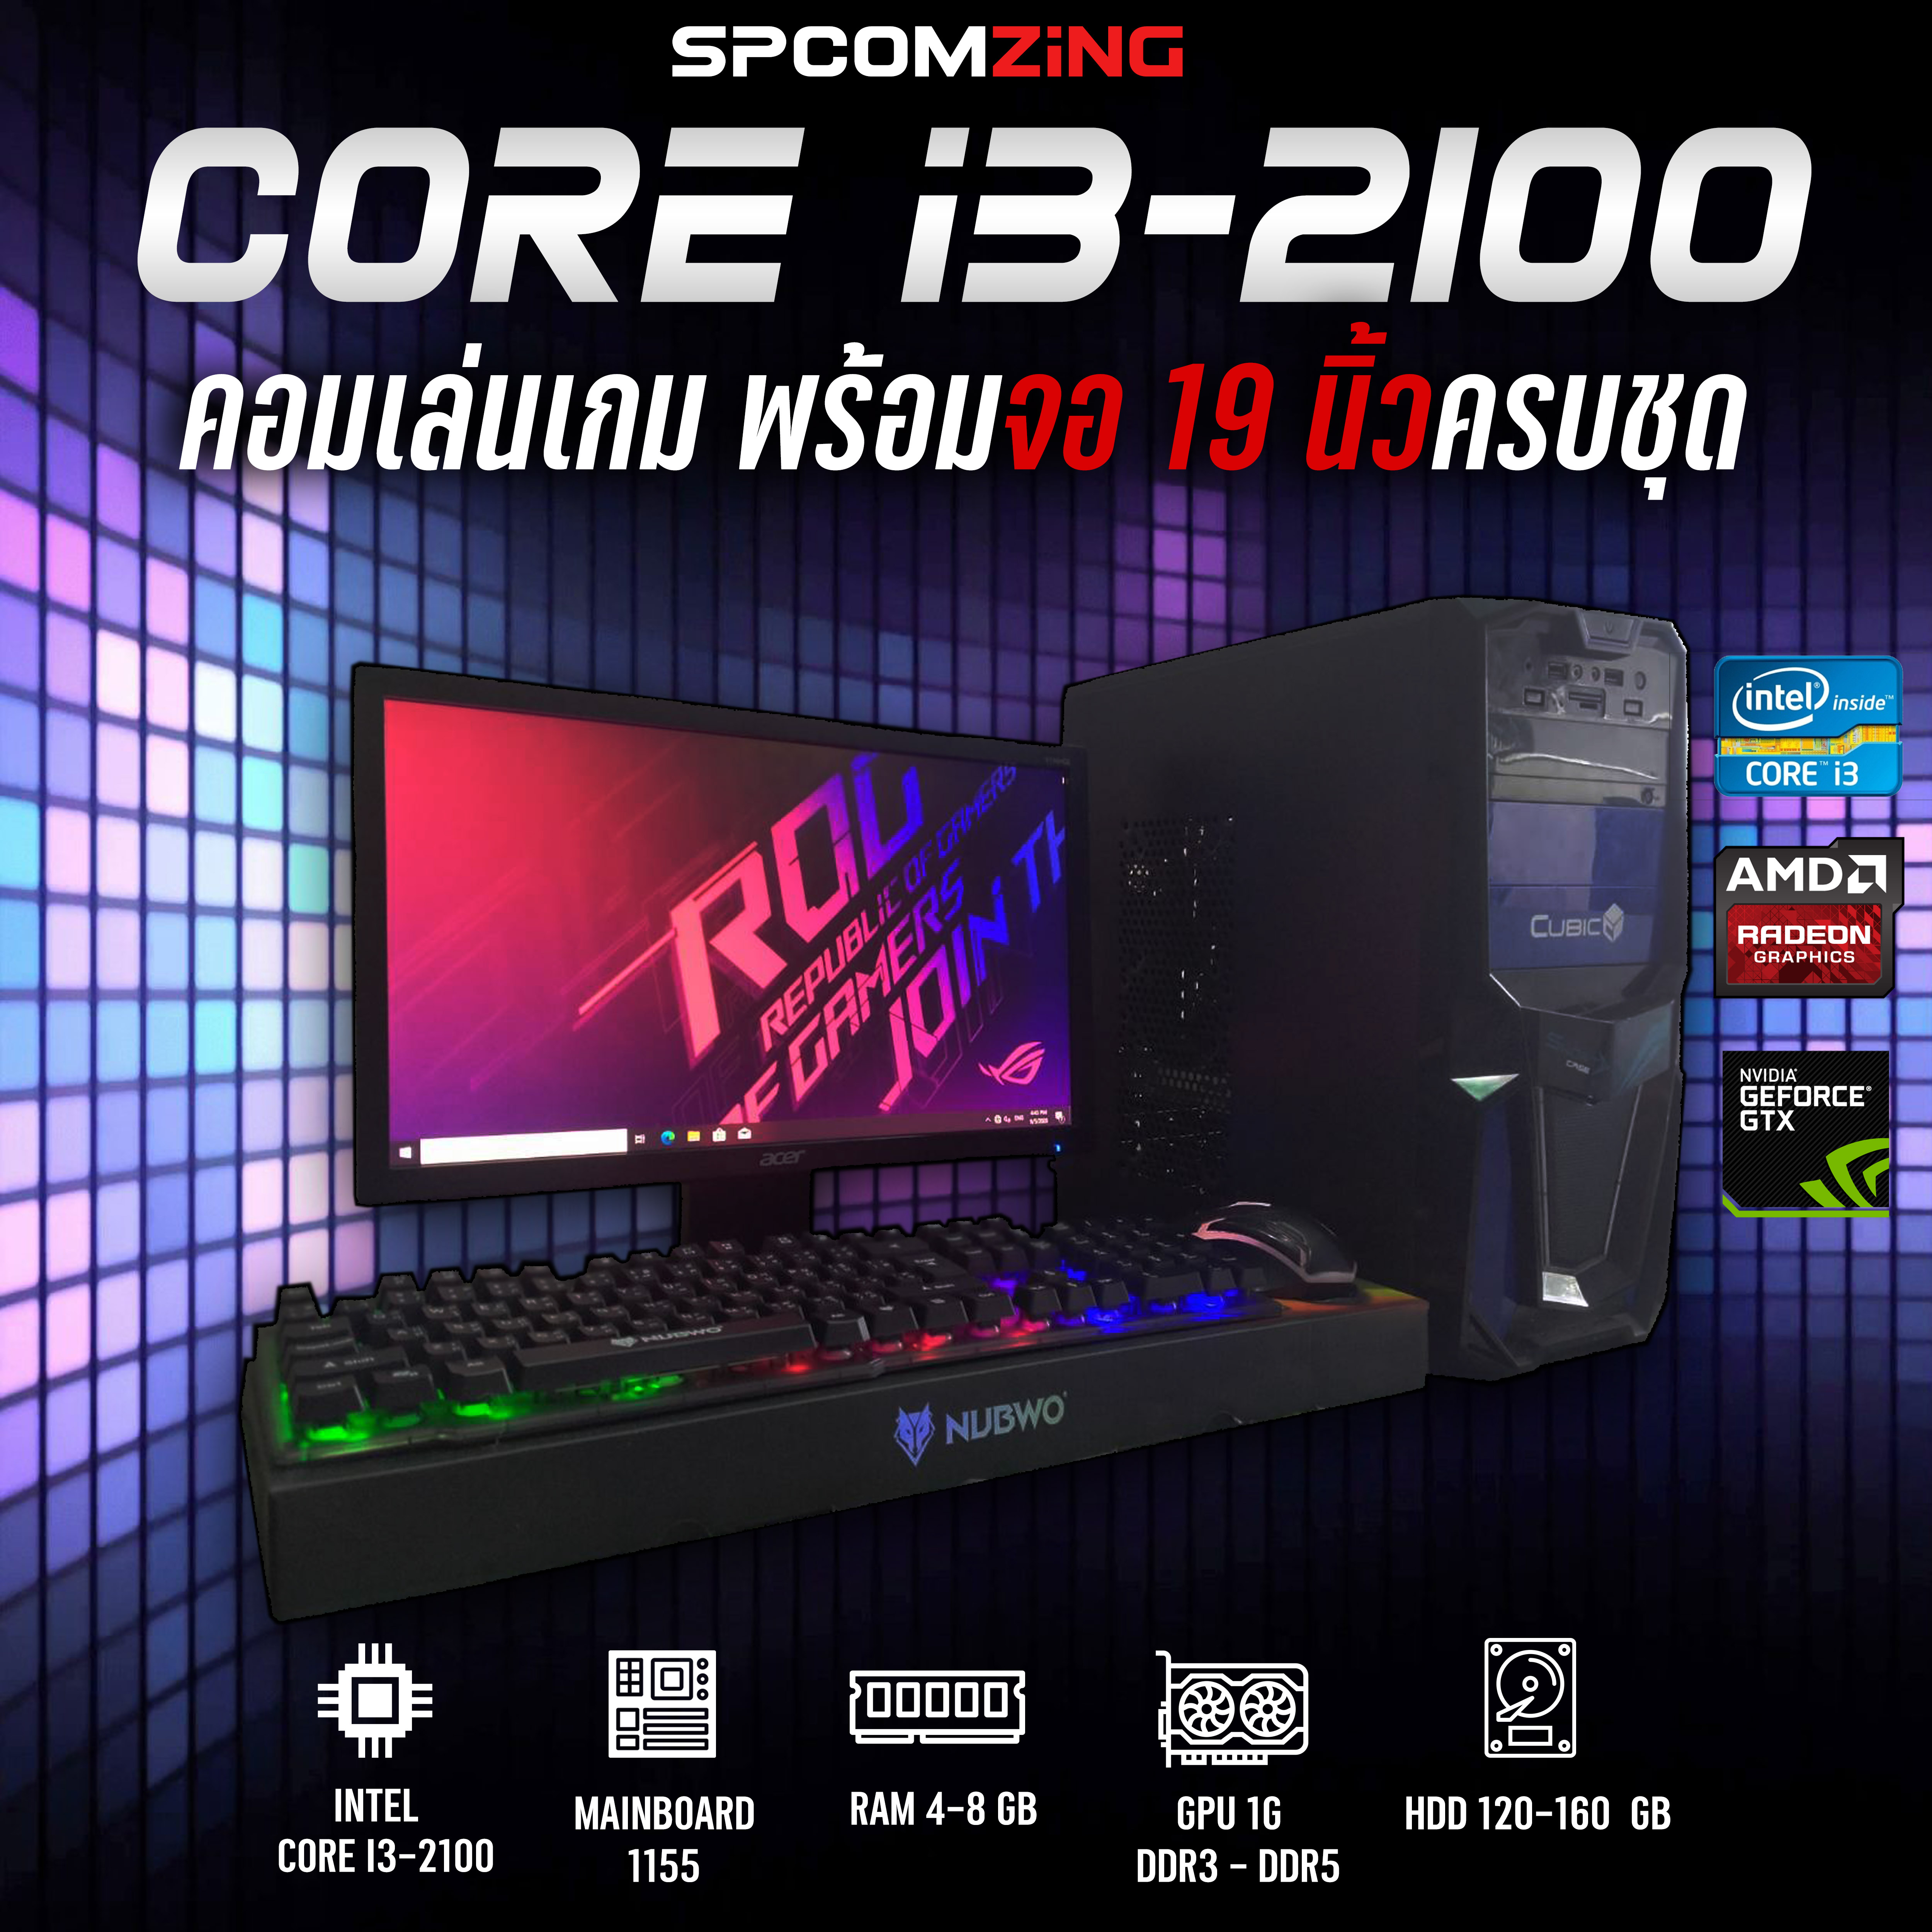 [COMZING]cz04 คอมพิวเตอร์เล่นเกม คอมประกอบ เล่นเกม ทำงาน Intel Core i3-2100  VGA 1G DDR3-DDR5 เพิ่มแรมได้ พร้อมจอ 19 นิ้วเล่น PubgMobile PB SF เกมออนไลน์สบายๆ